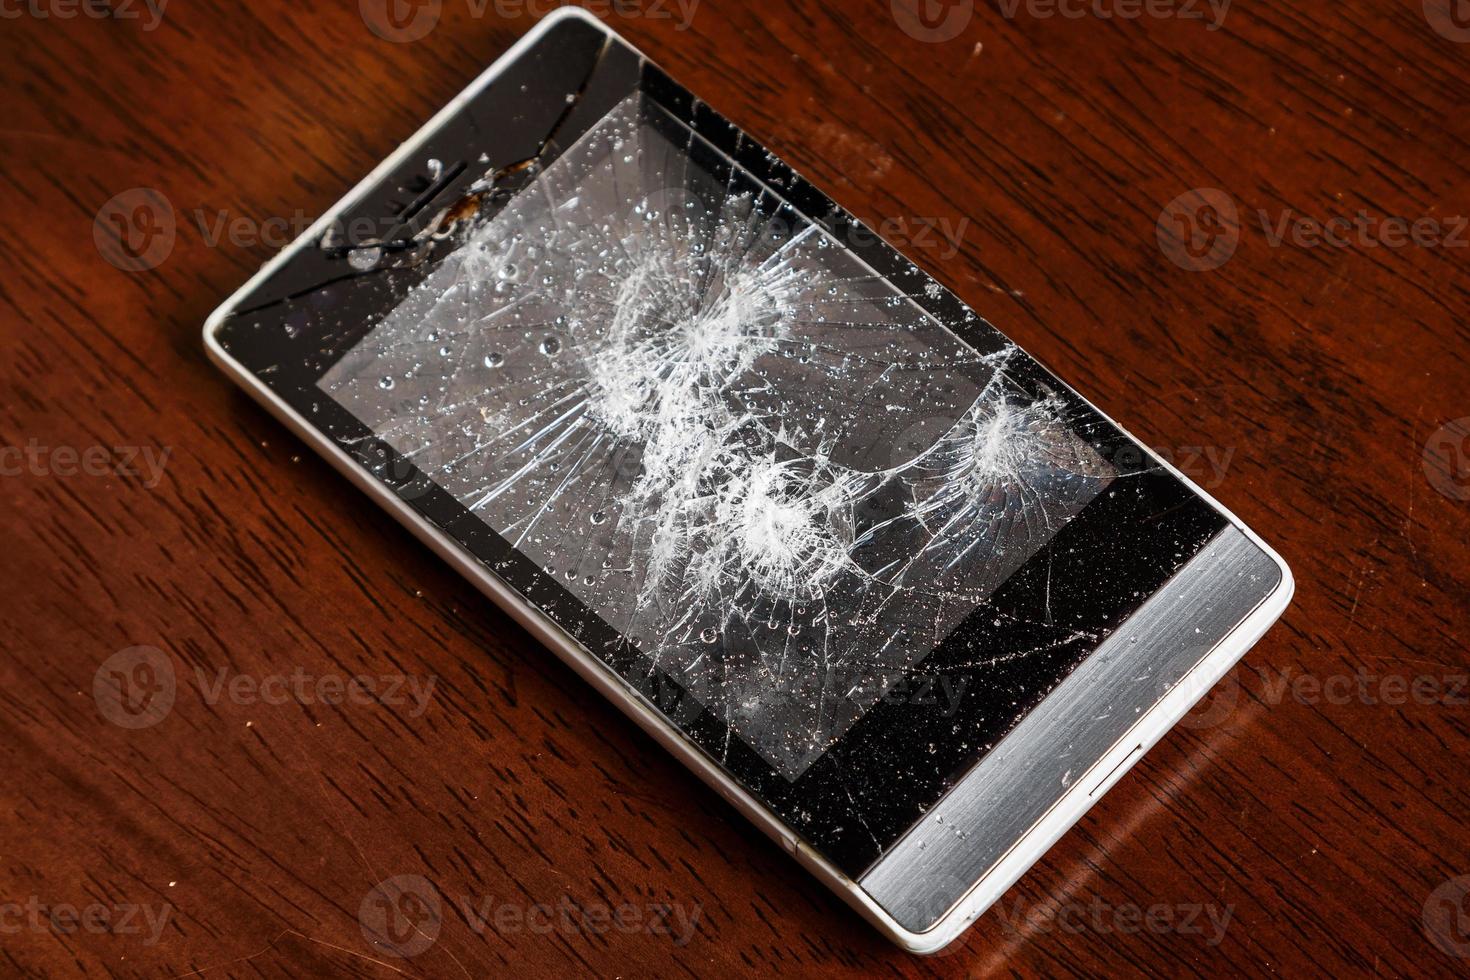 Damaged display on smartphone photo